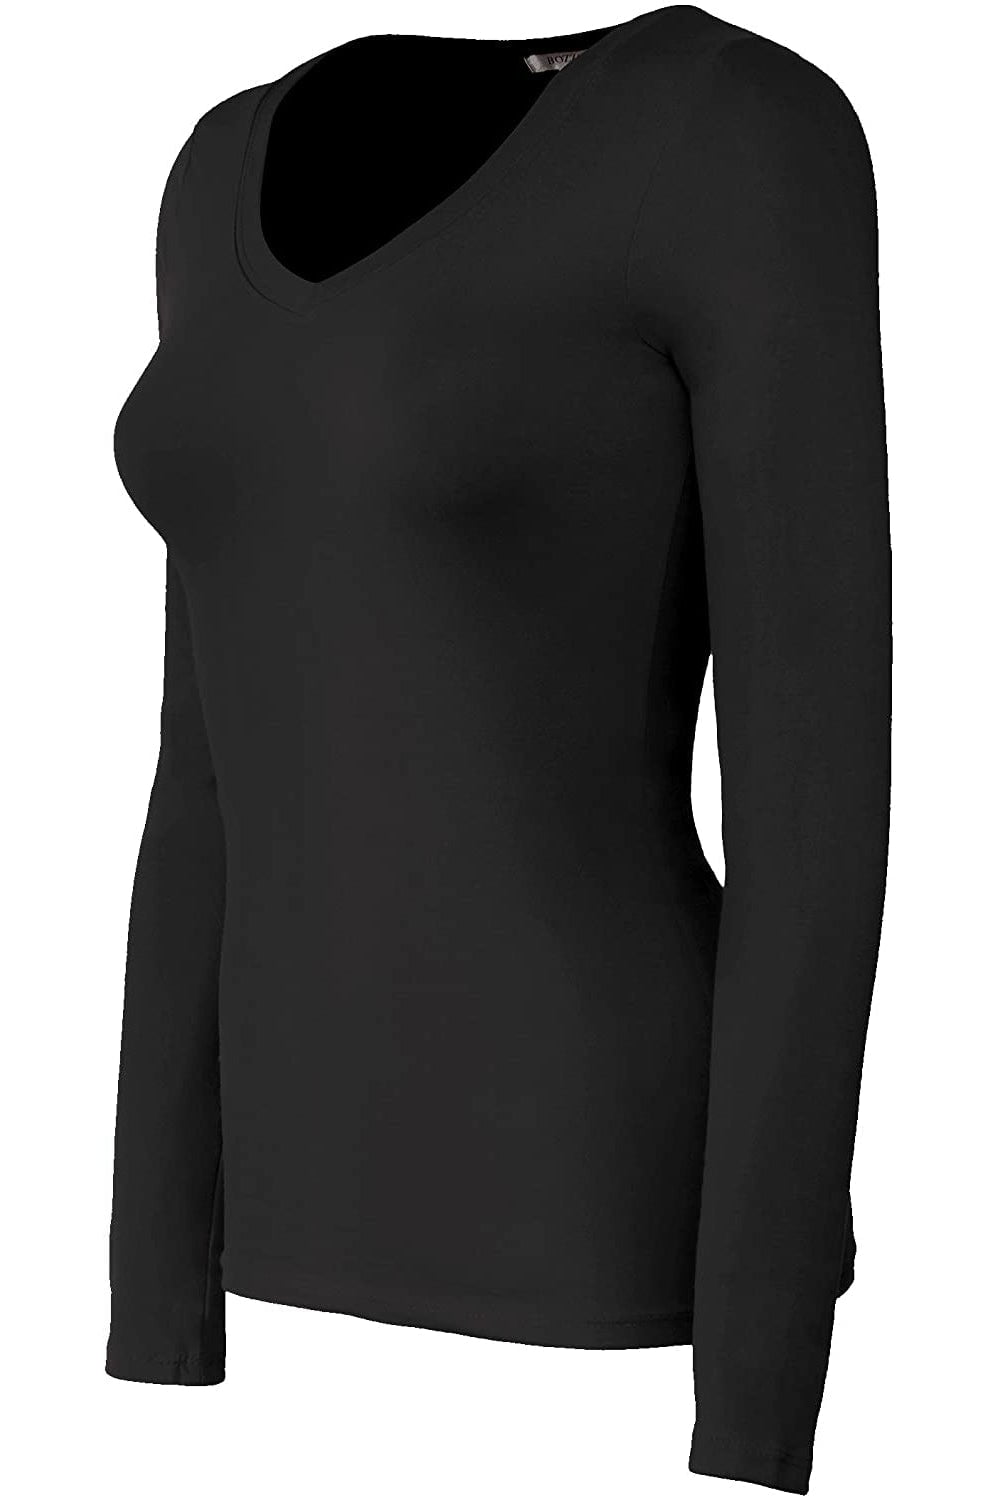 Bozzolo Women's Basic V-Neck Warm Soft Stretchy Long Sleeves T Shirt -  Walmart.com